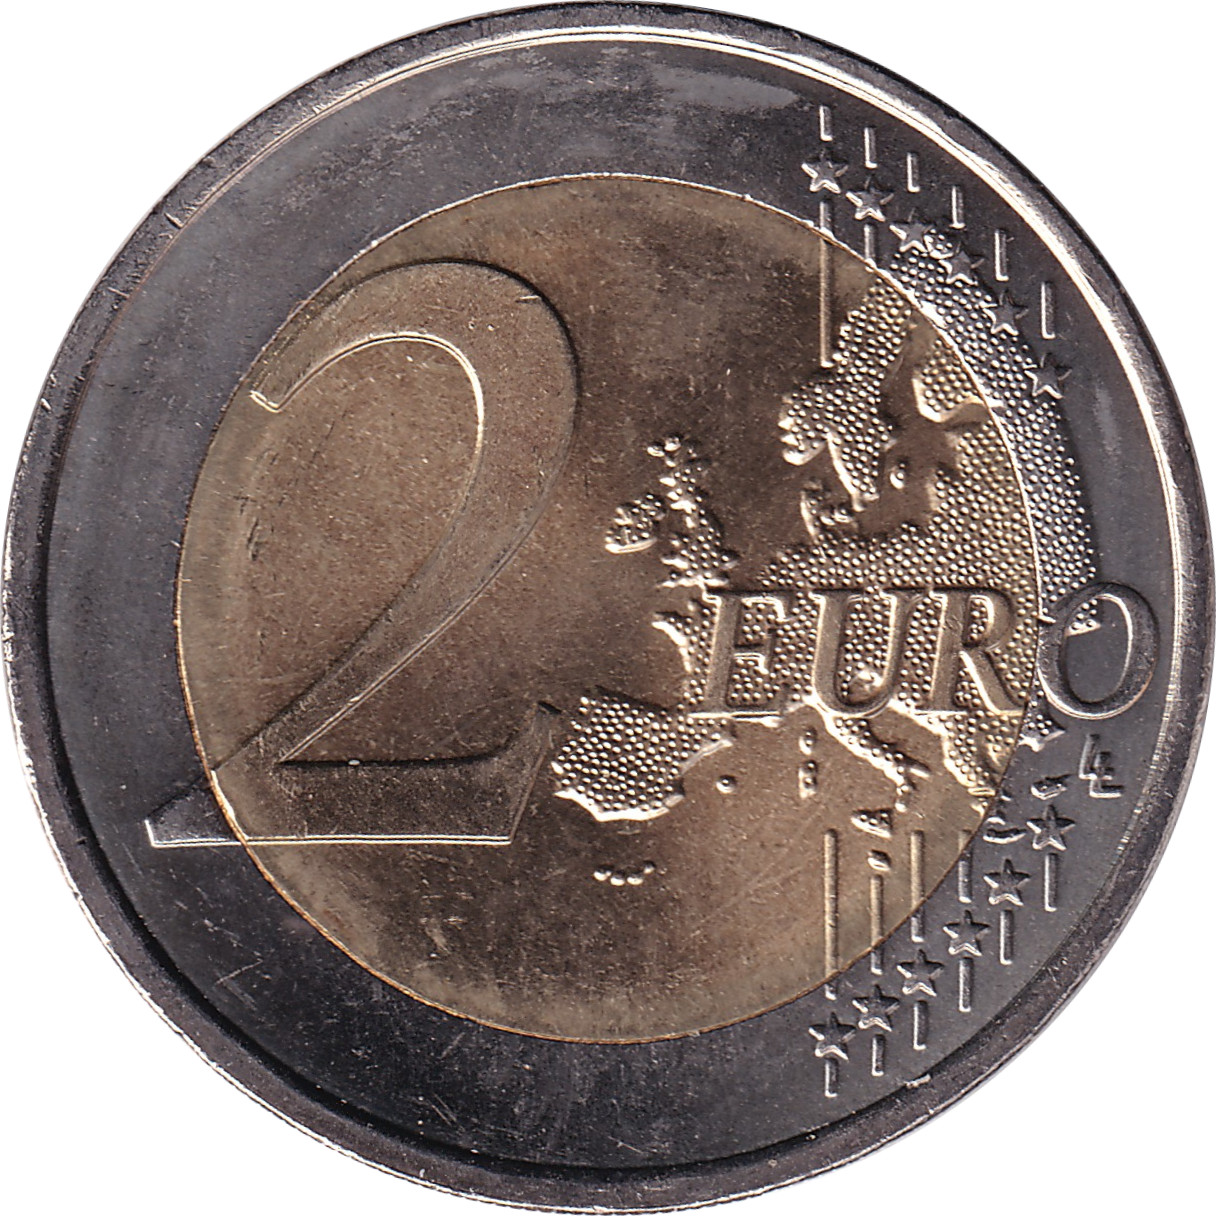 2 euro - Pierre de Coubertin